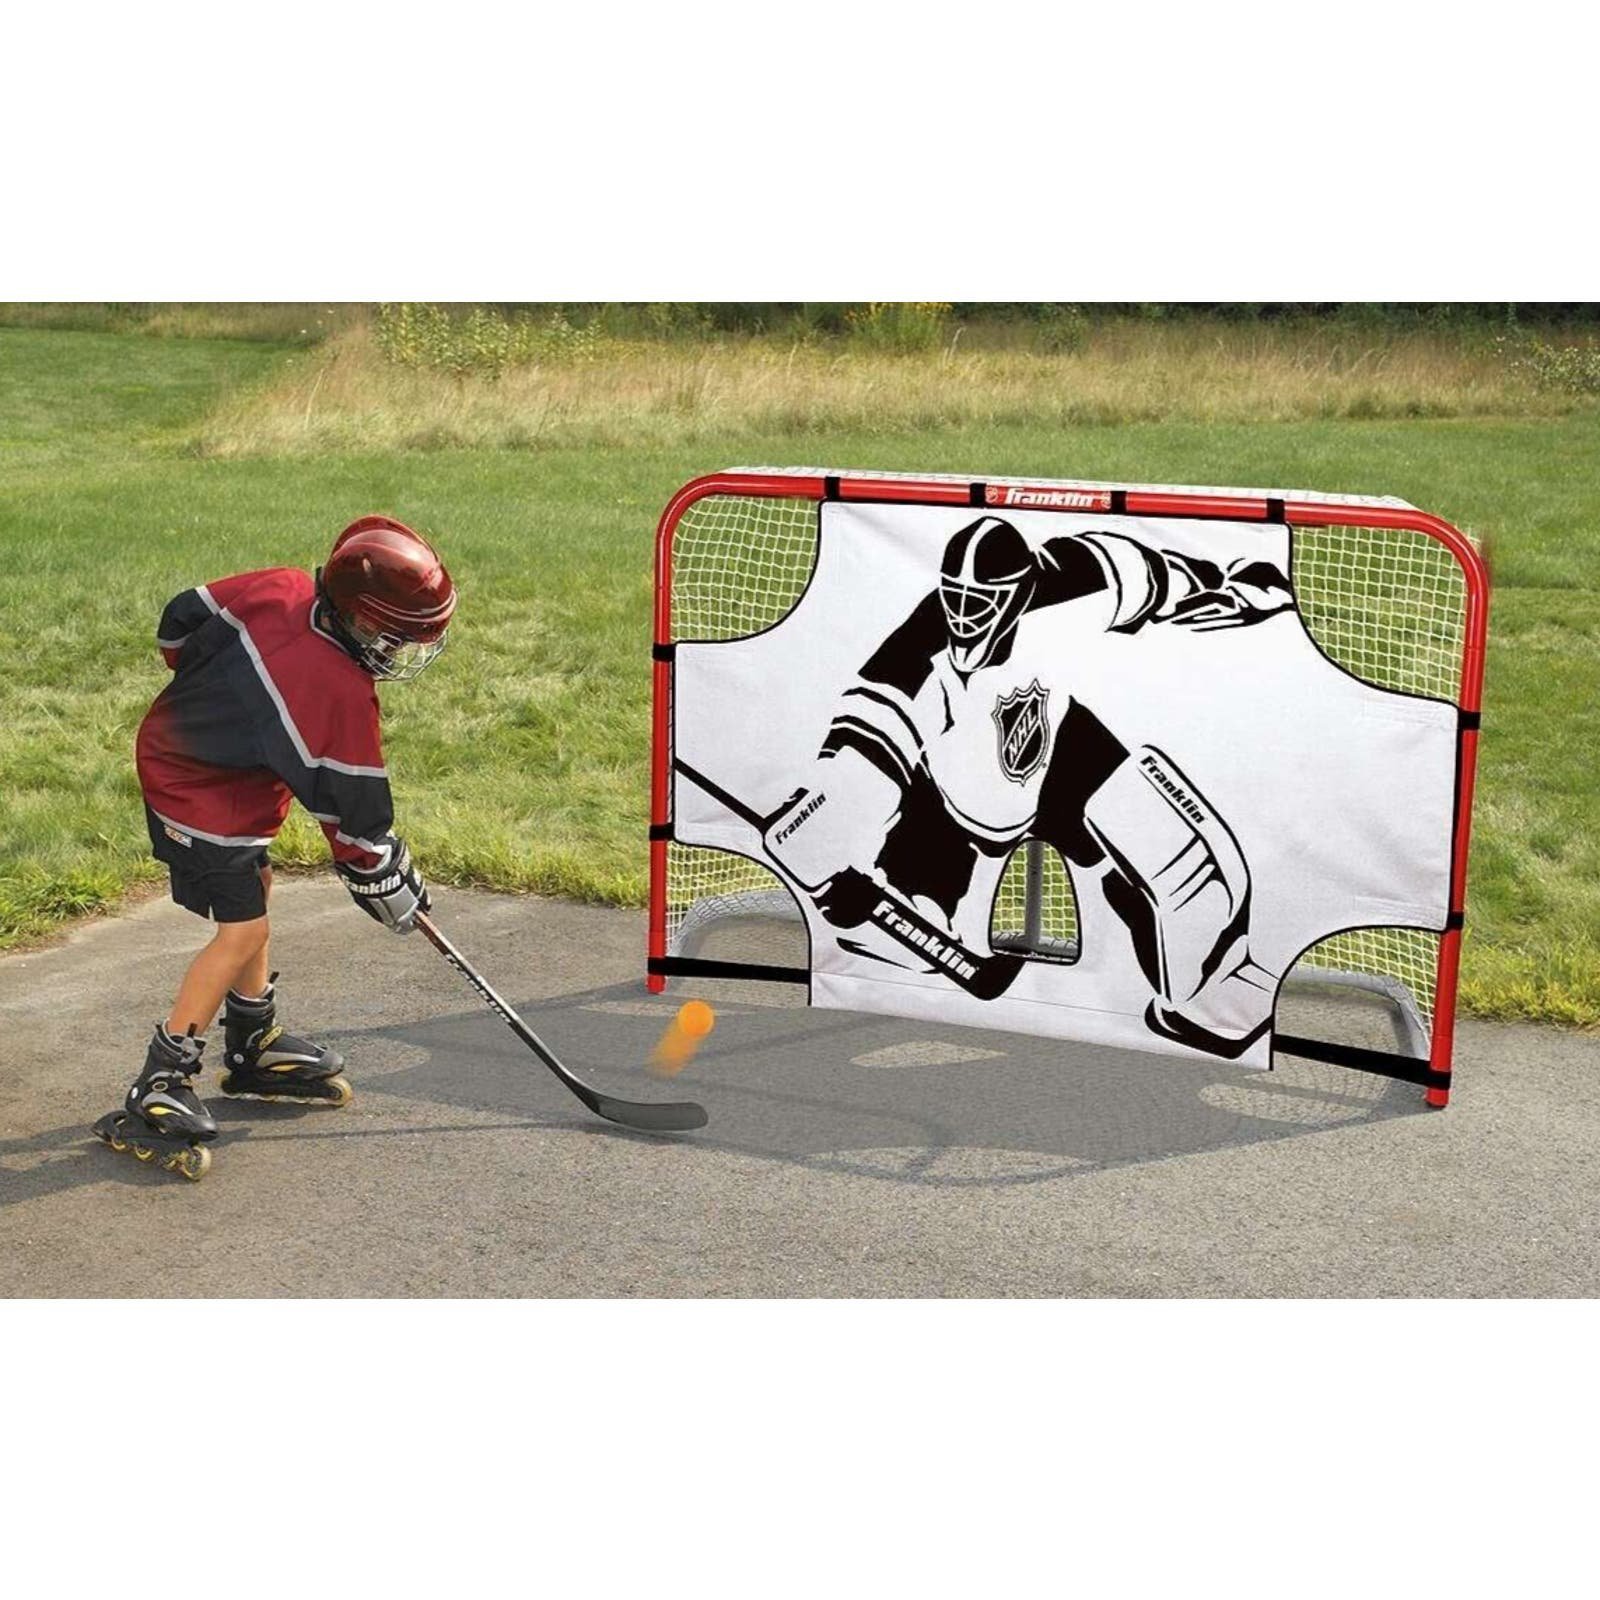 Franklin Sports Hockey Shooting Target - NHL - Fits 54 x 44 Inch Goal Street Hoc AY9DLK4JF